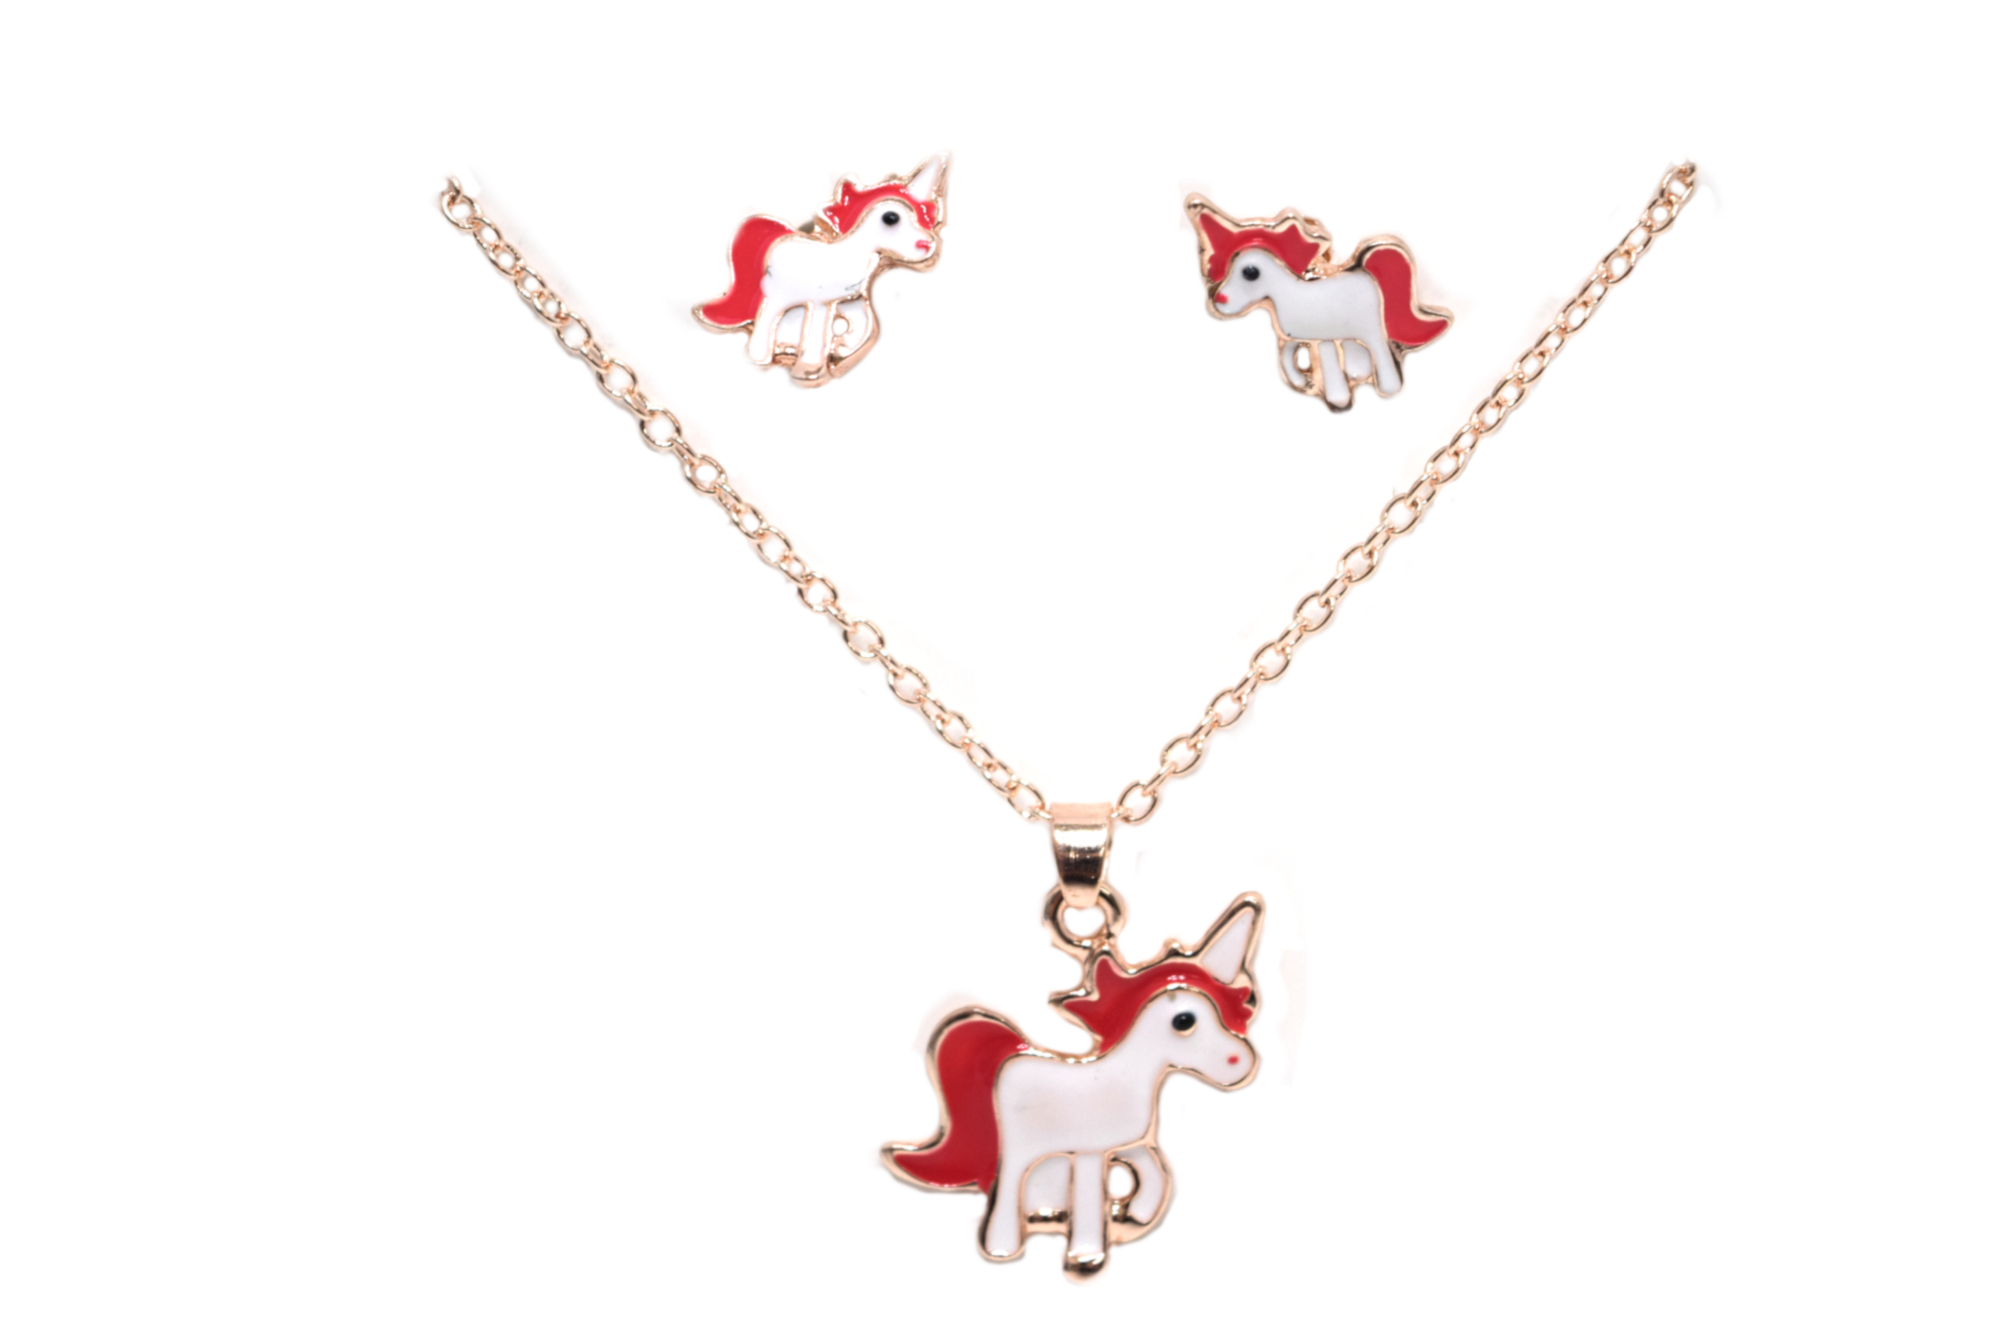 Unicorn Necklace Set White Pink/Red Earring Necklace Unicorn Girls Jewelry, J-154-US - image 5 of 10